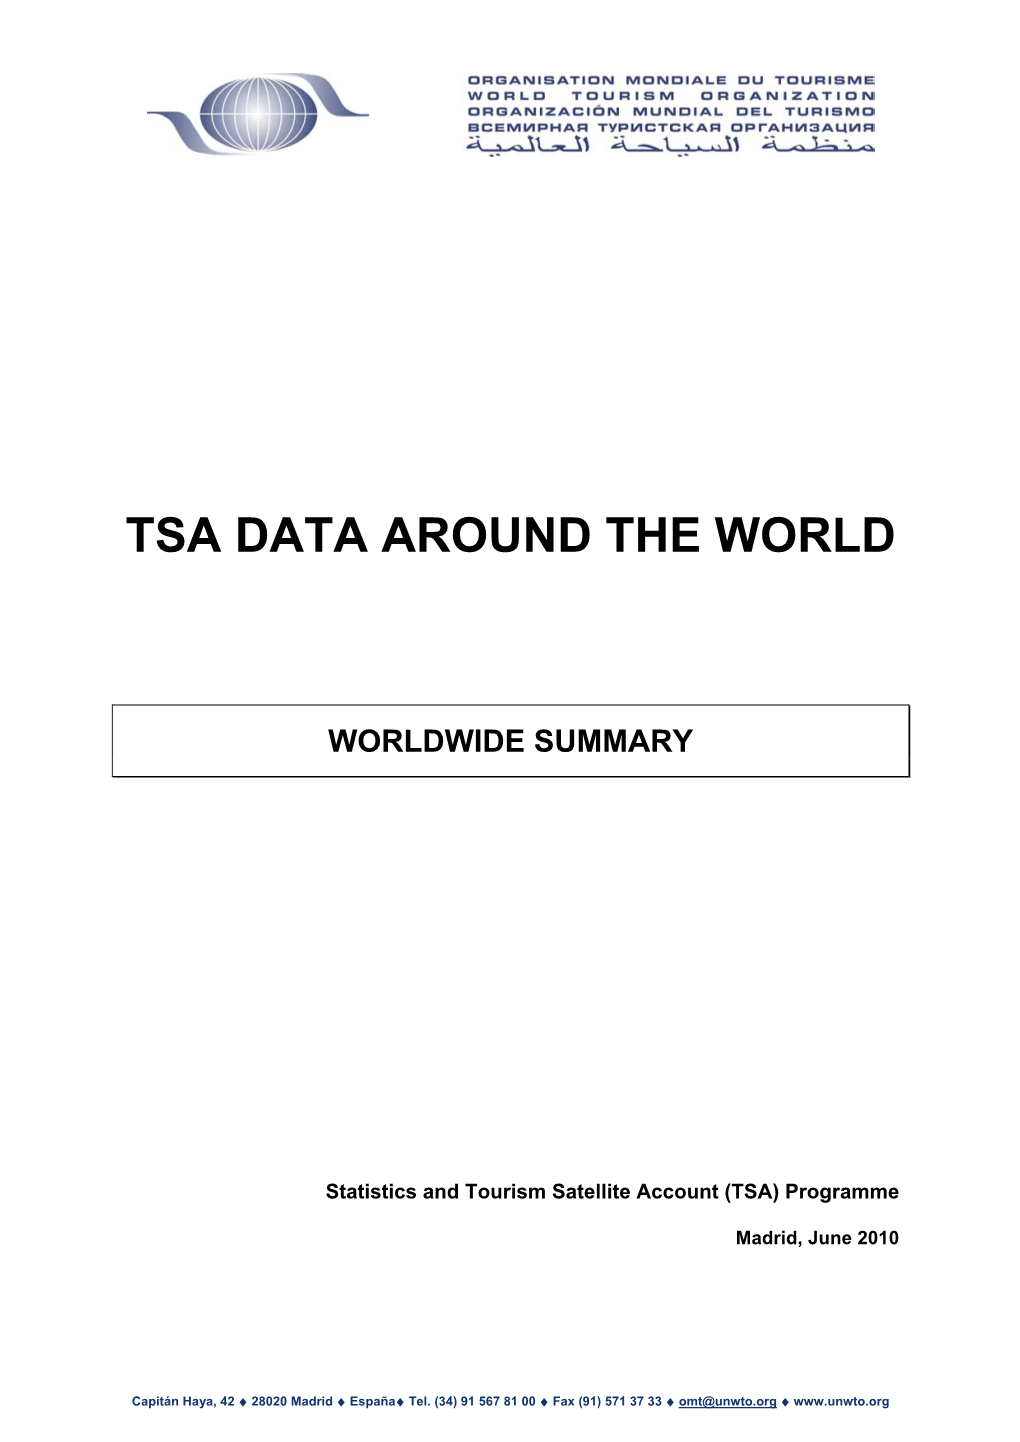 Dissemination of TSA Data and Experiences at YYYY Y YYYYYYY YYYYYY Y Y the International Level?